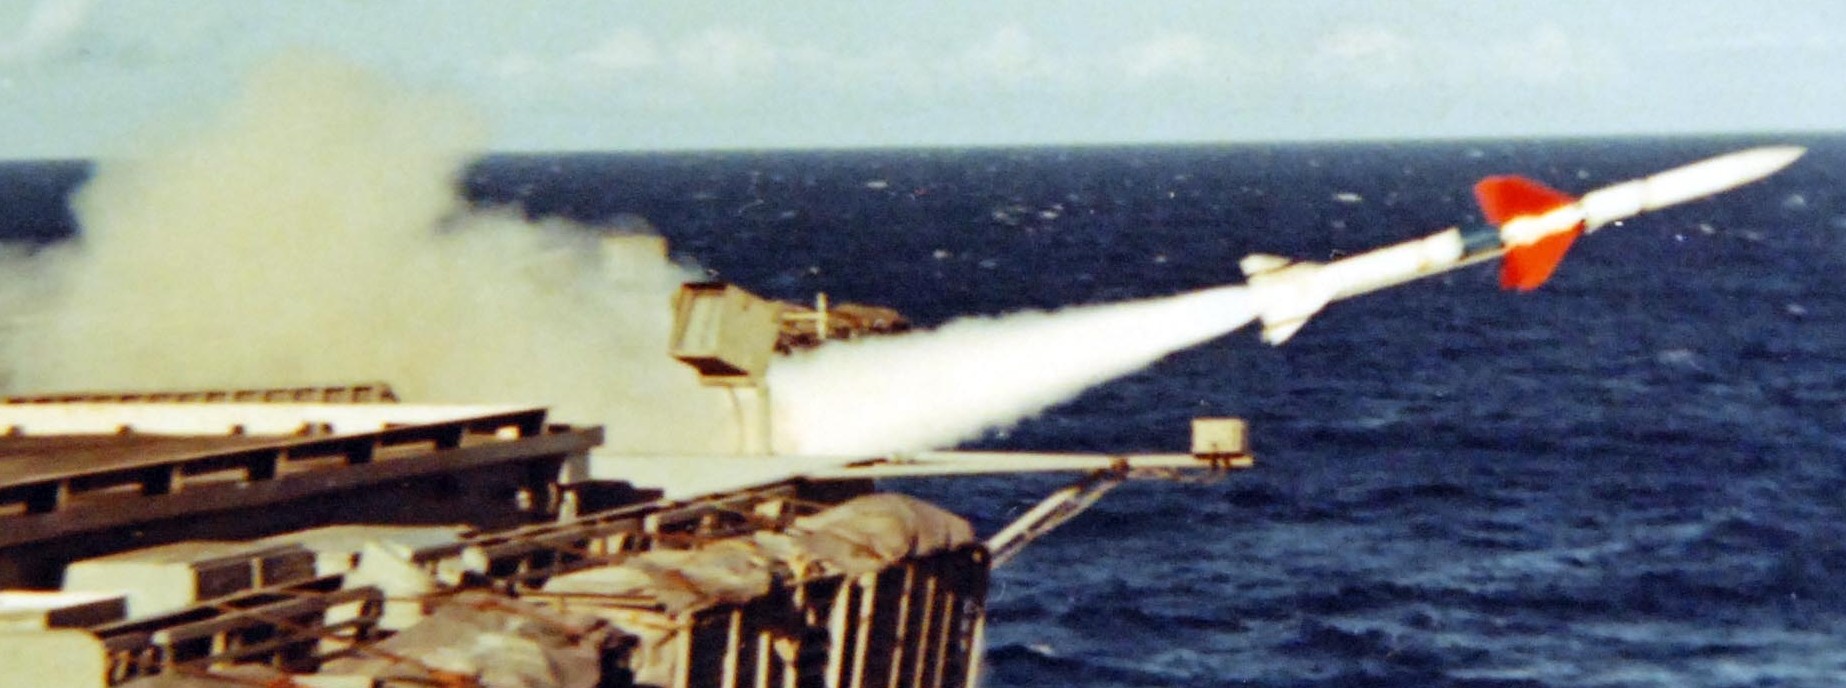 rim-7 sea sparrow missile nato nssm sam bpdms nato 65